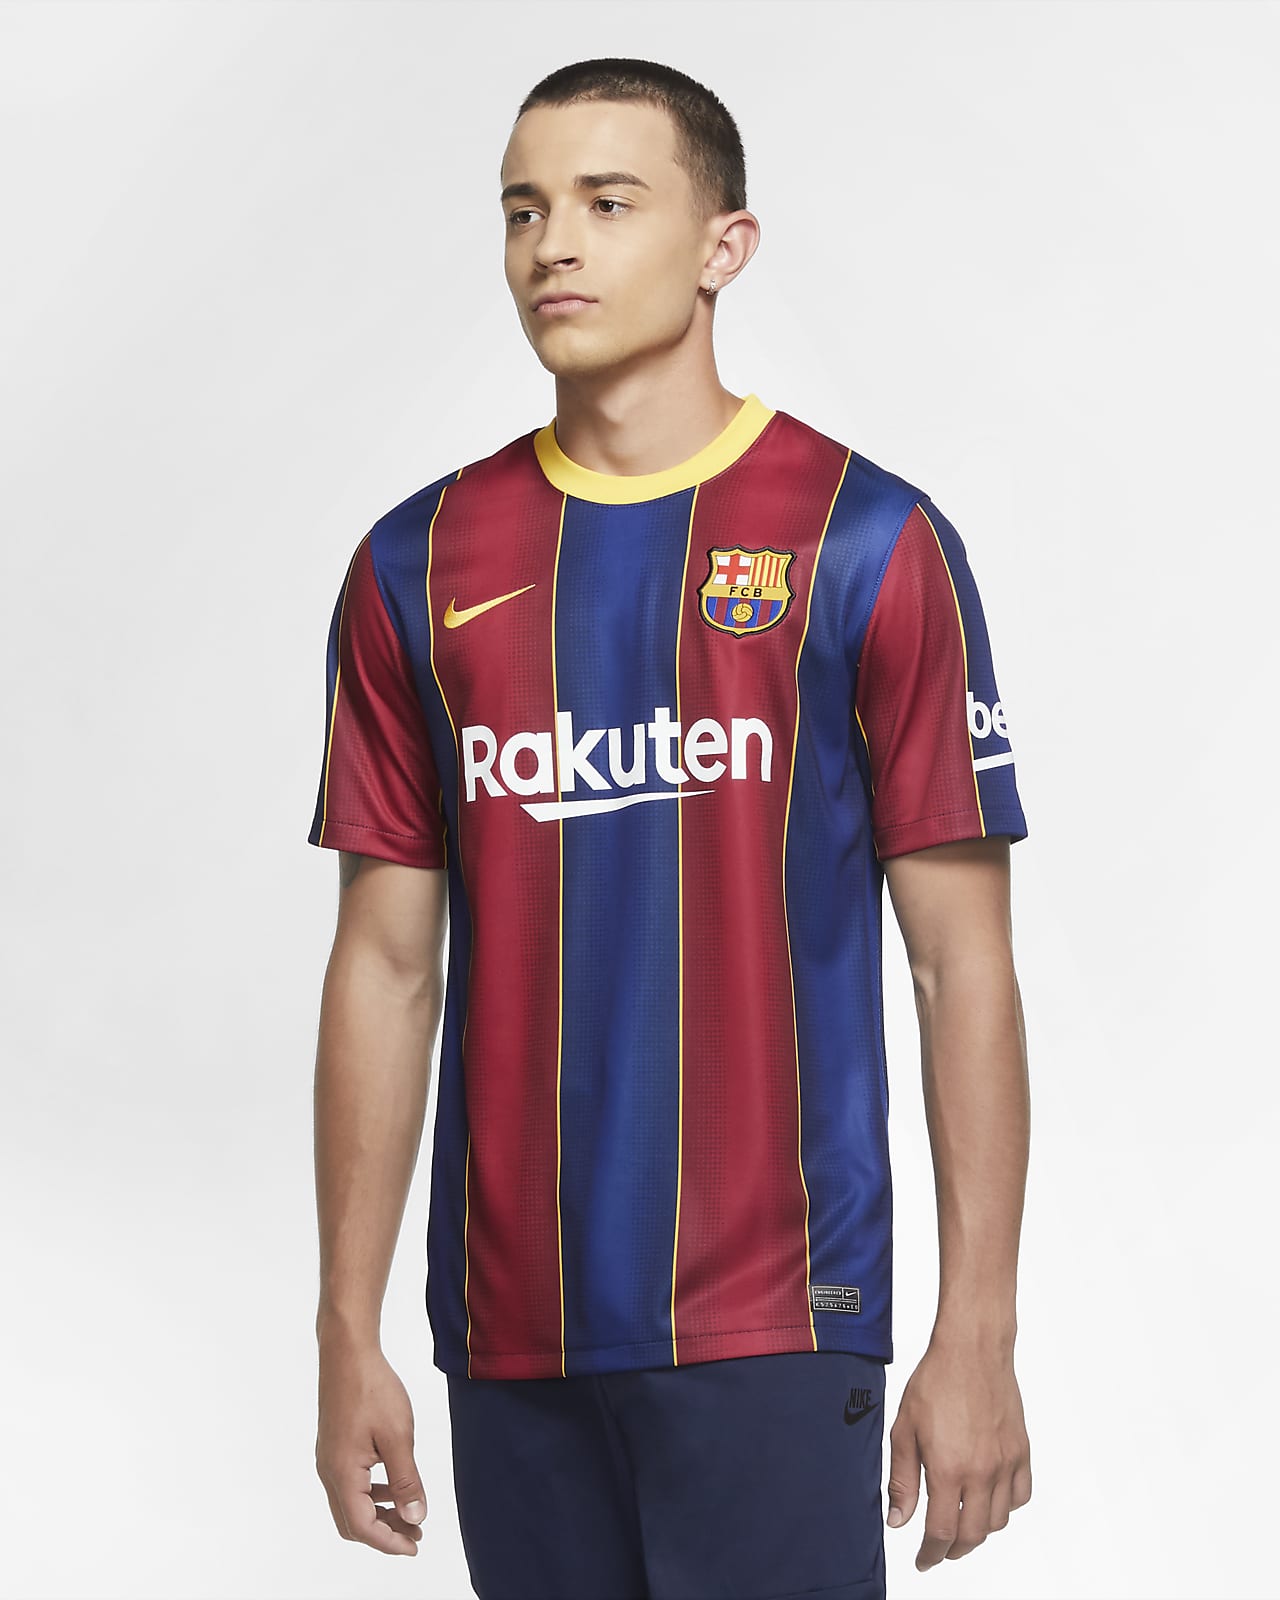 Fc Barcelona Jersey 2020/21 Long Sleeve : Football Shirt Nike Fc ...